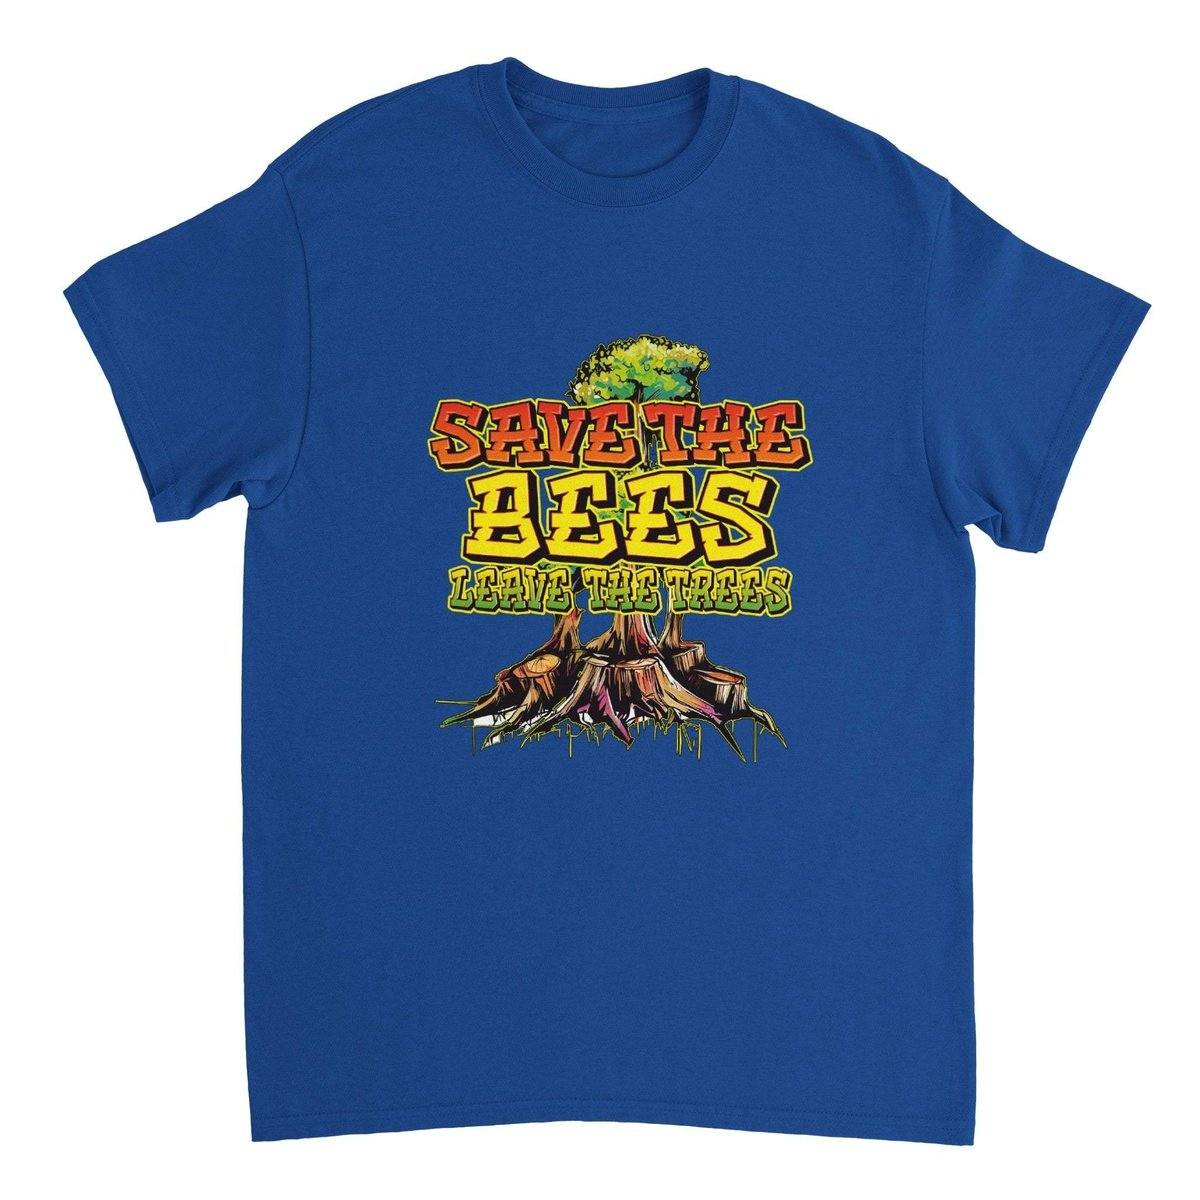 Save The Bees Tshirt - Leave The Trees - Stumps - Unisex Crewneck T-shirt Australia Online Color Royal / S